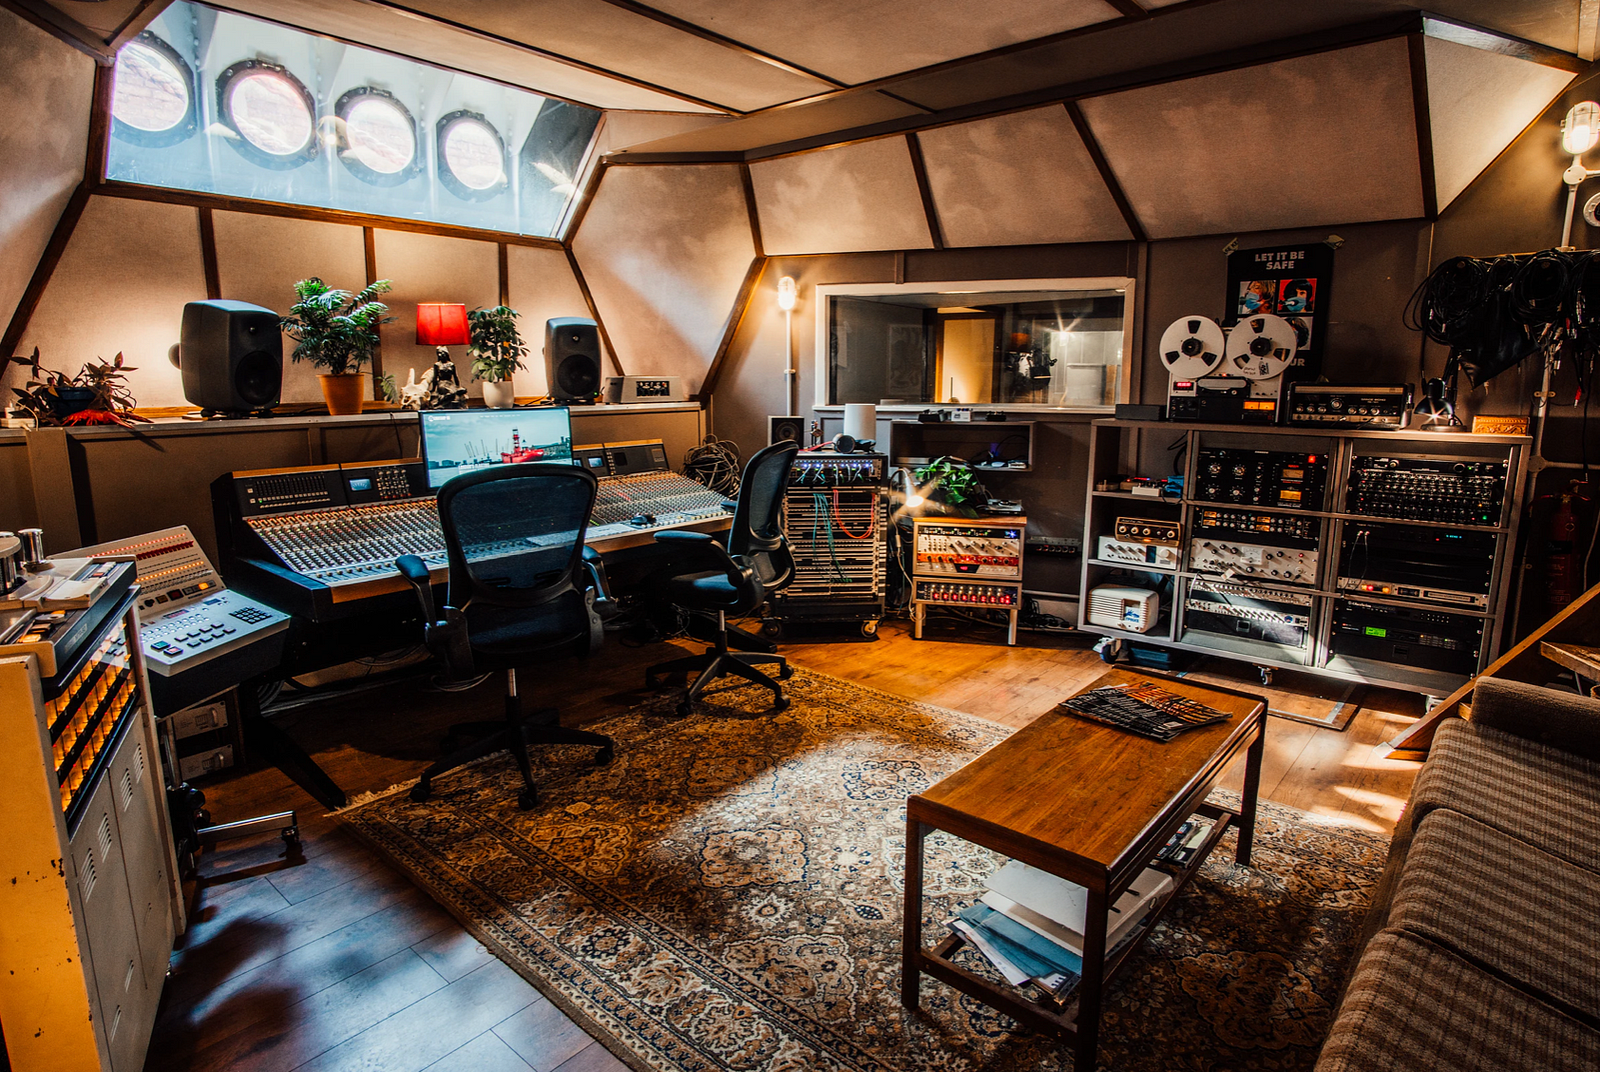 Music Studio 